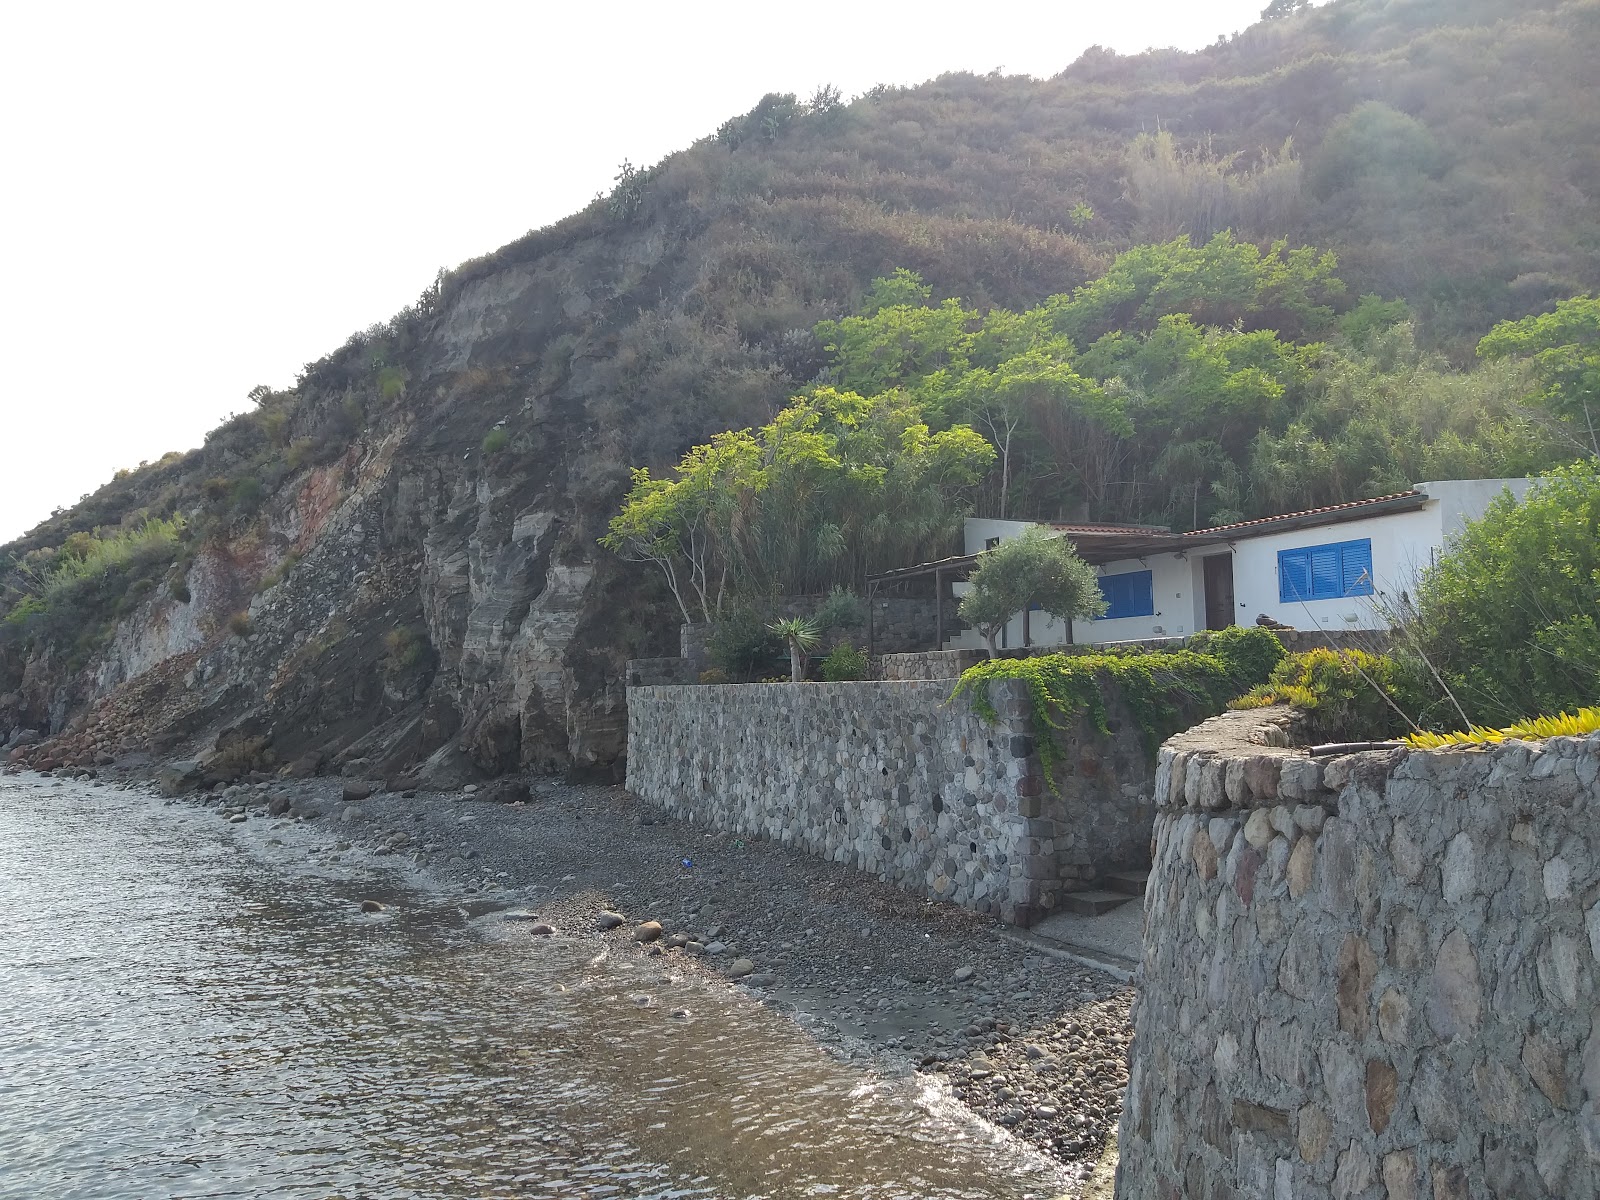 Fotografija Secca beach z sivi kamenček površino